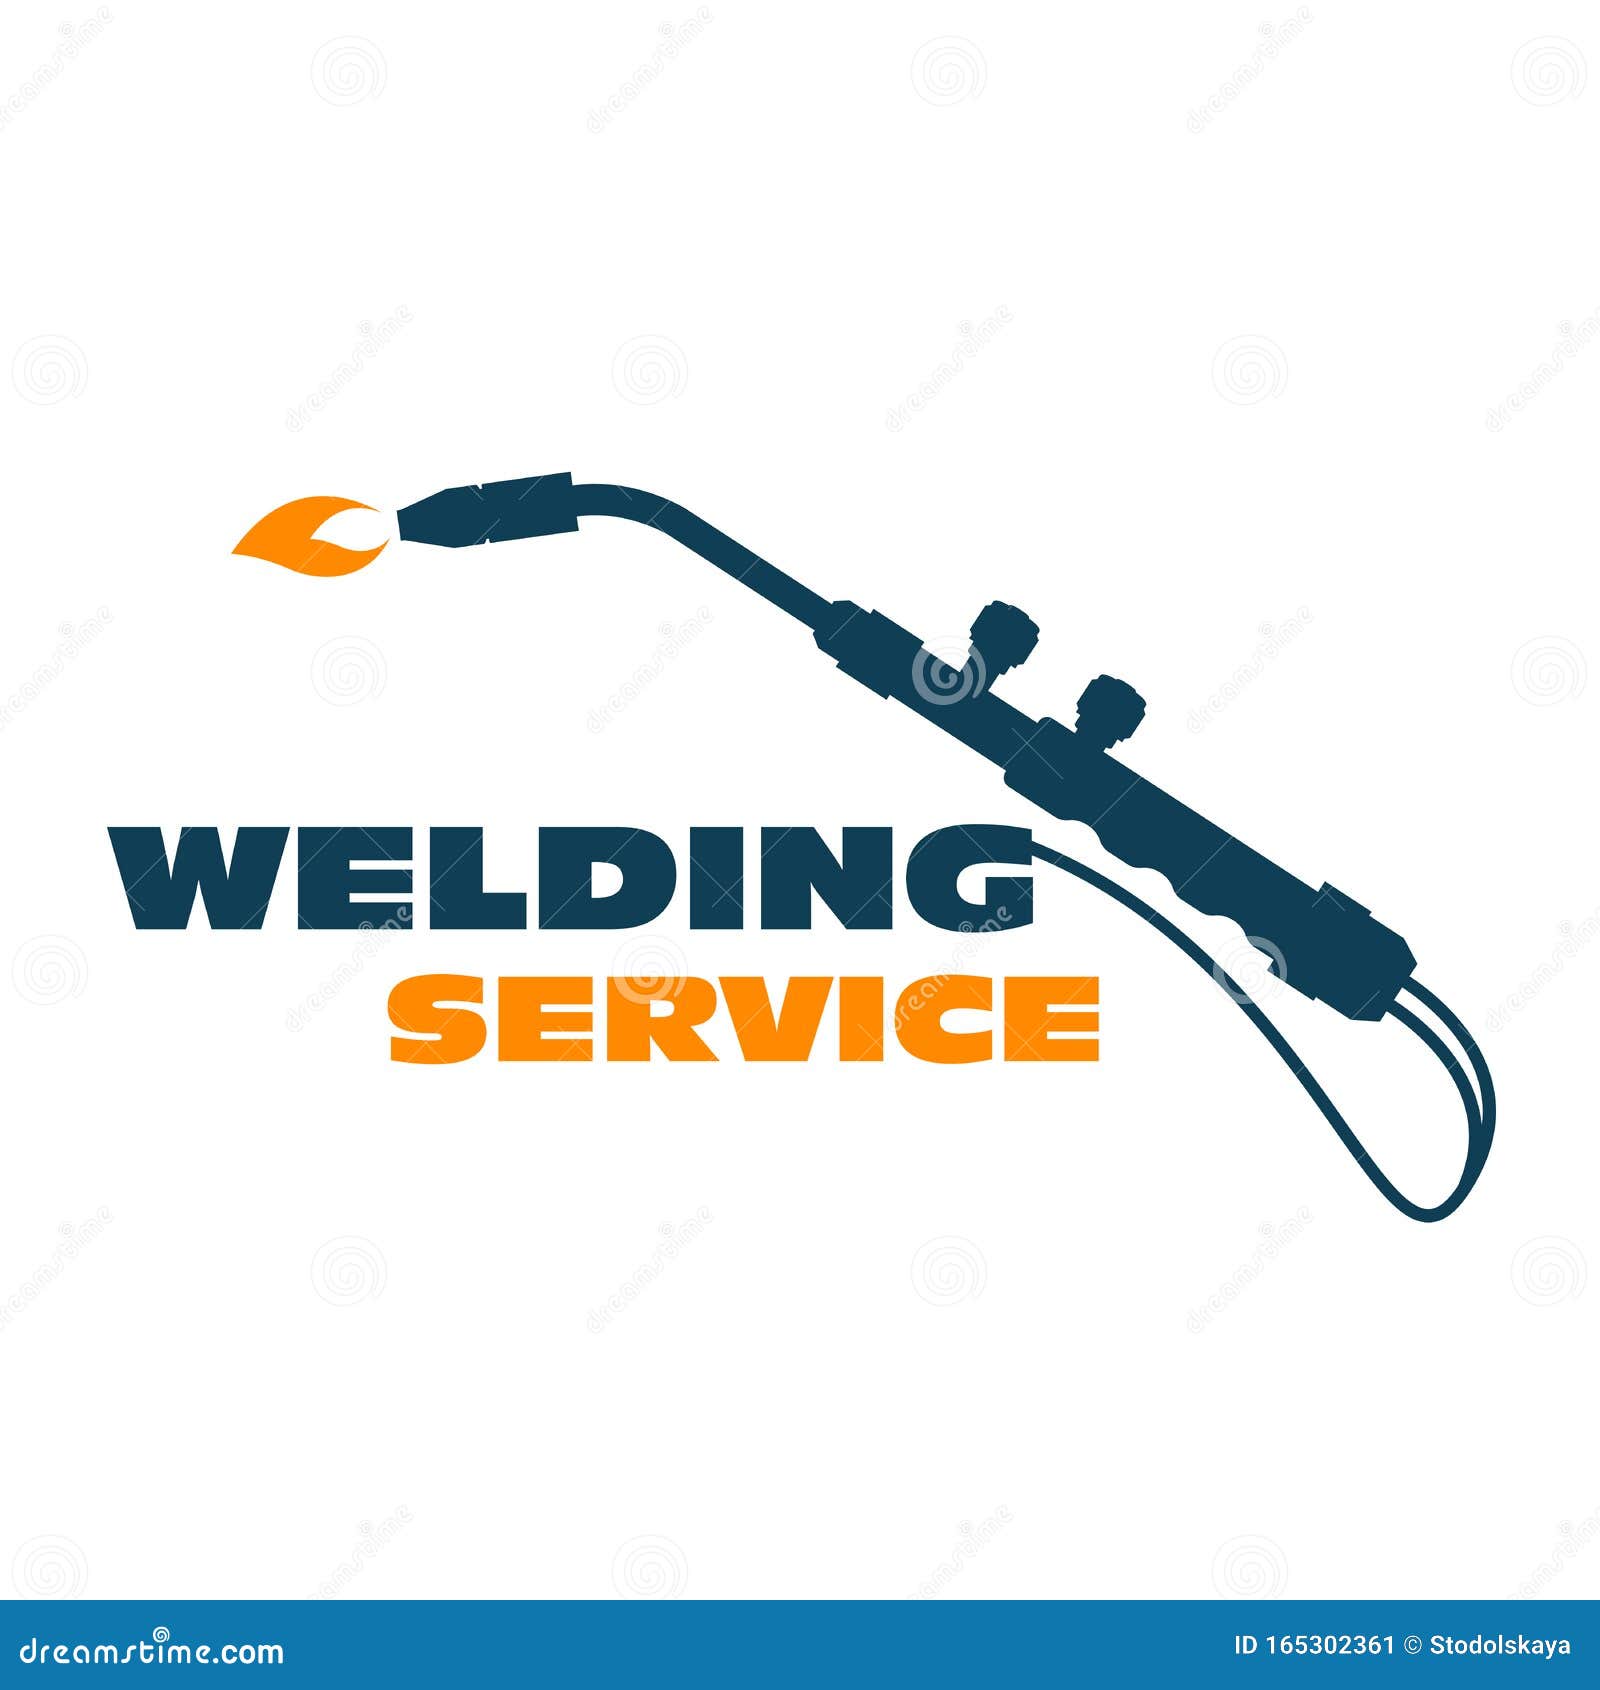 welding icon - burner cutting torch, weld service logo